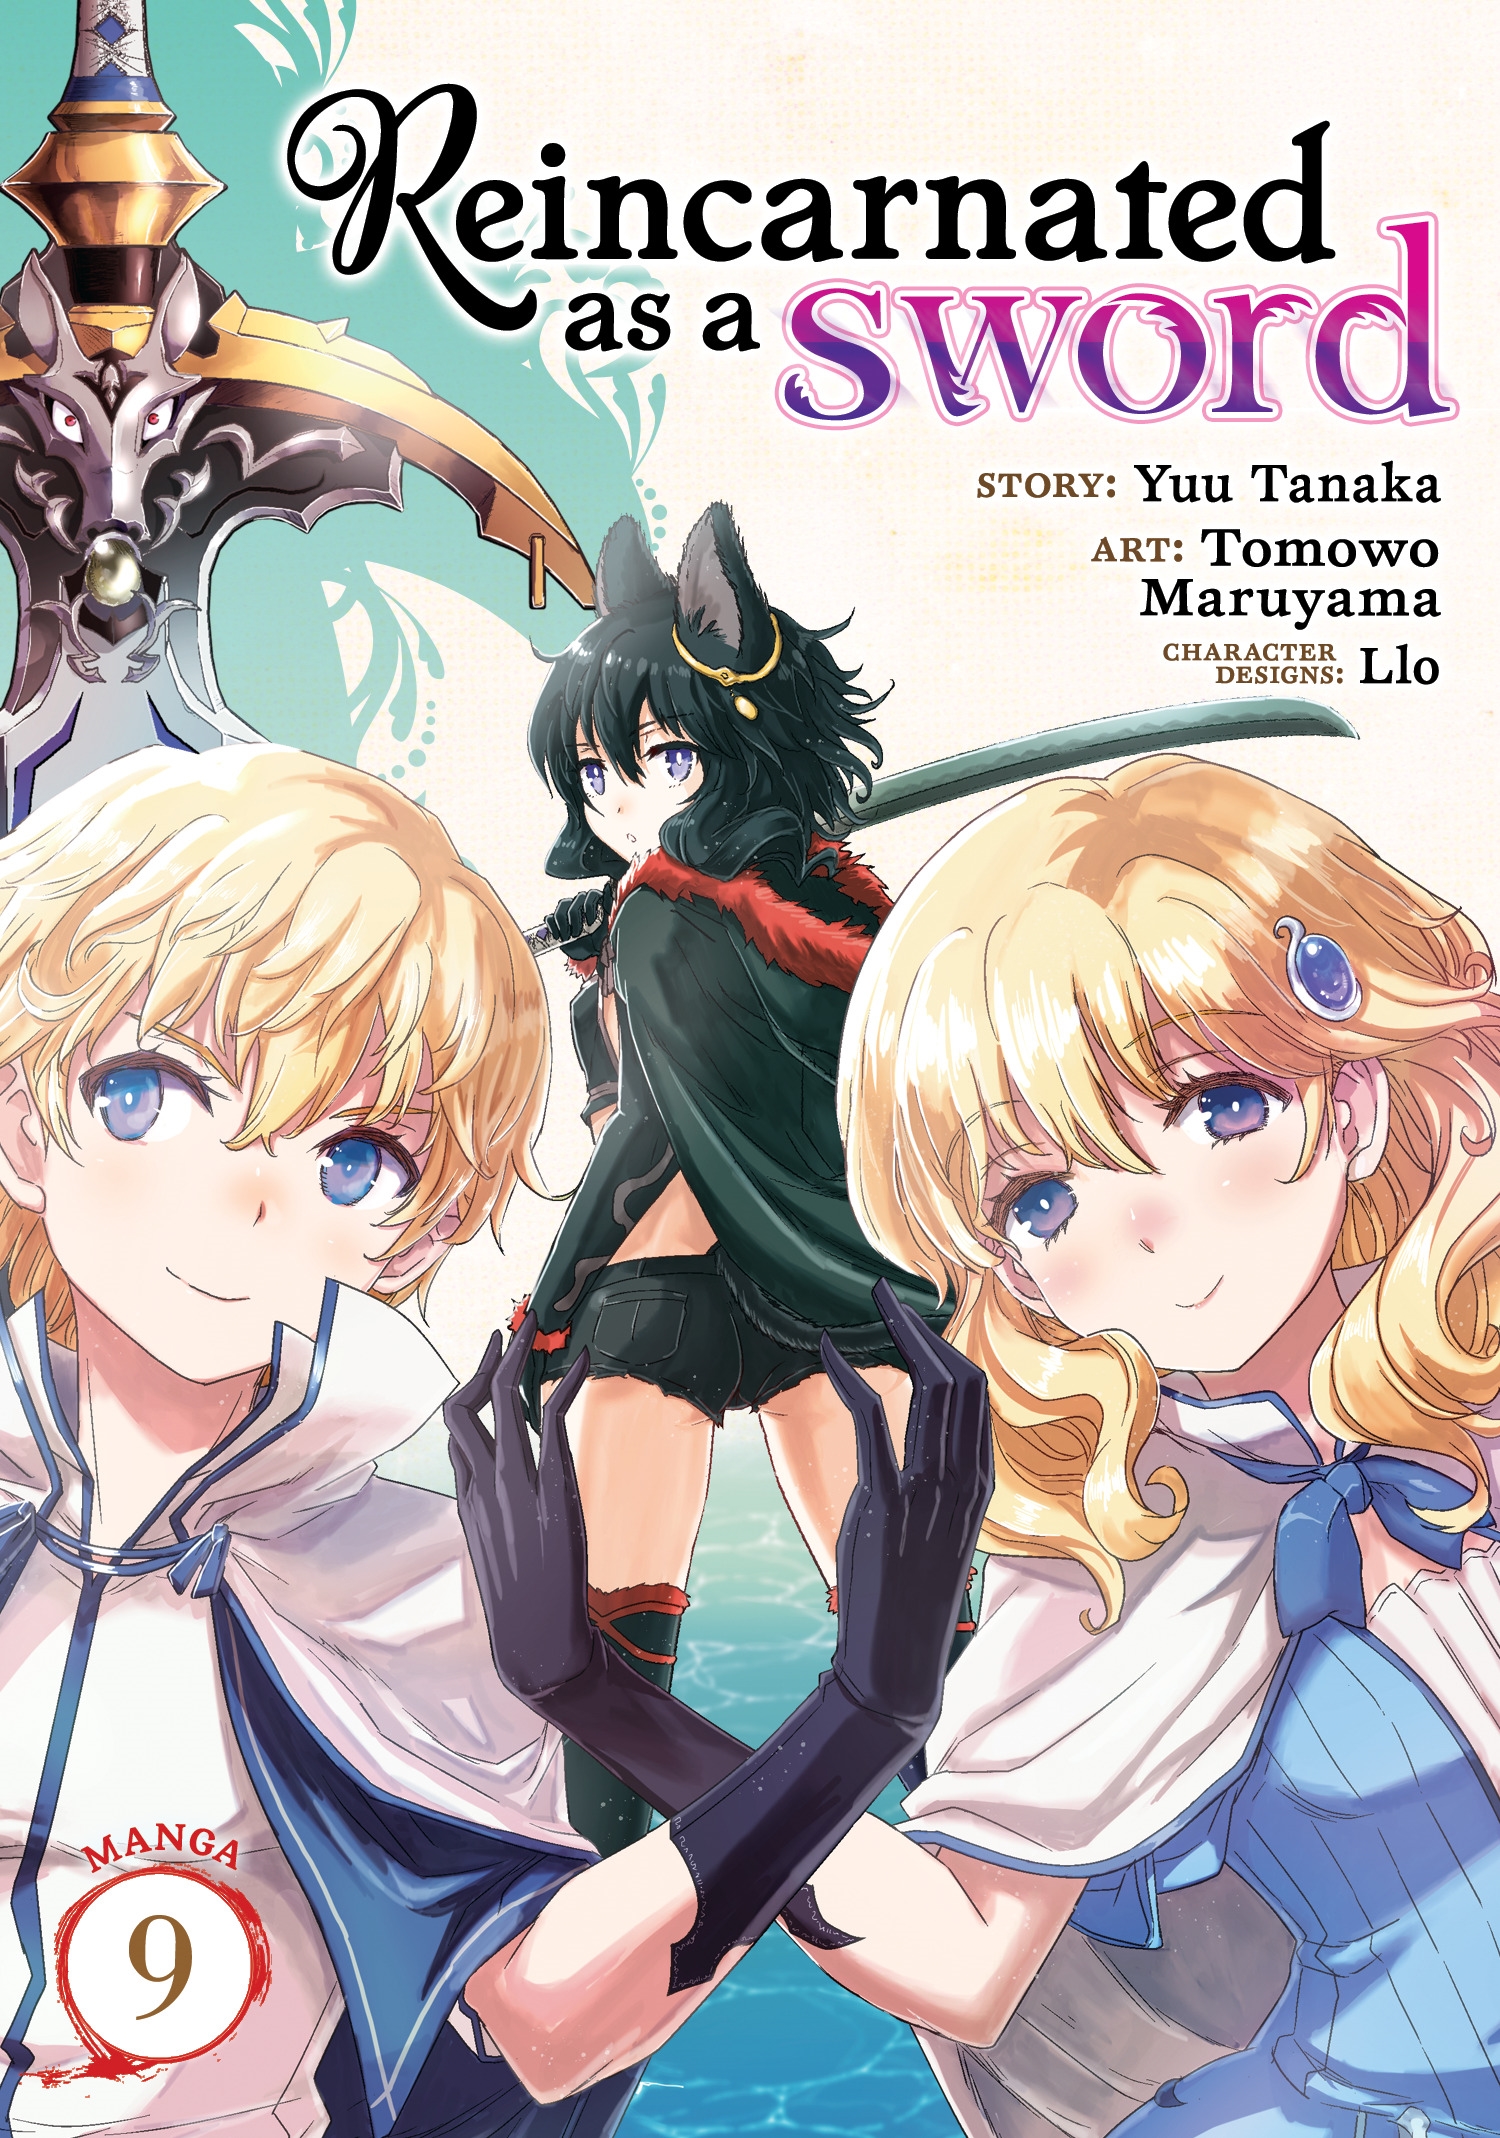 Reincarnated as a Sword (Manga) Vol. 9 by Yuu Tanaka - Penguin Books  Australia